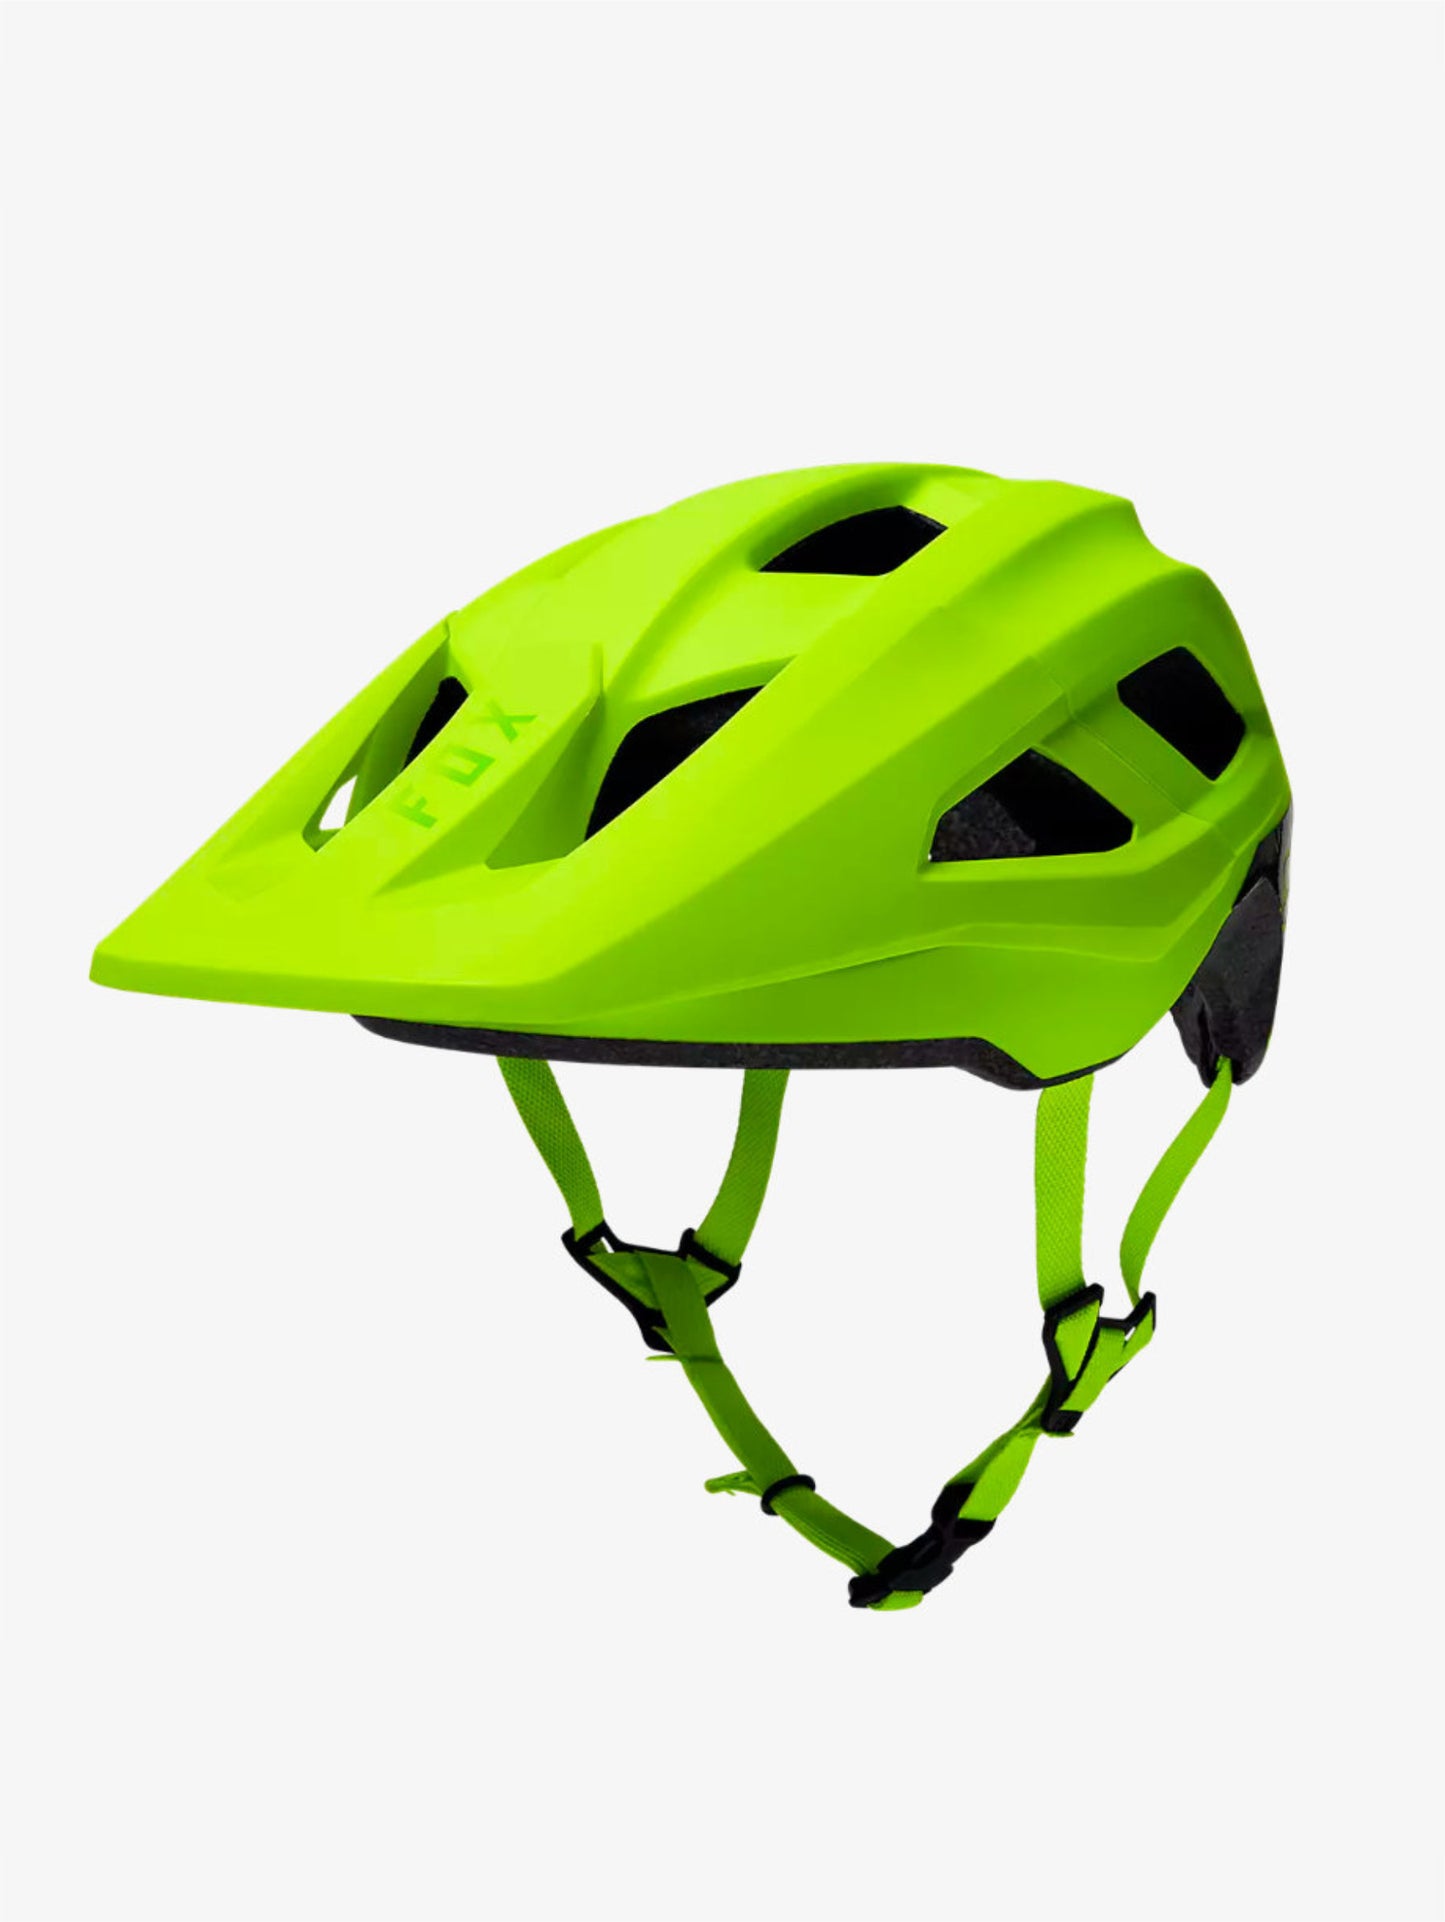 Mainframe Mips casco bici flo yellow